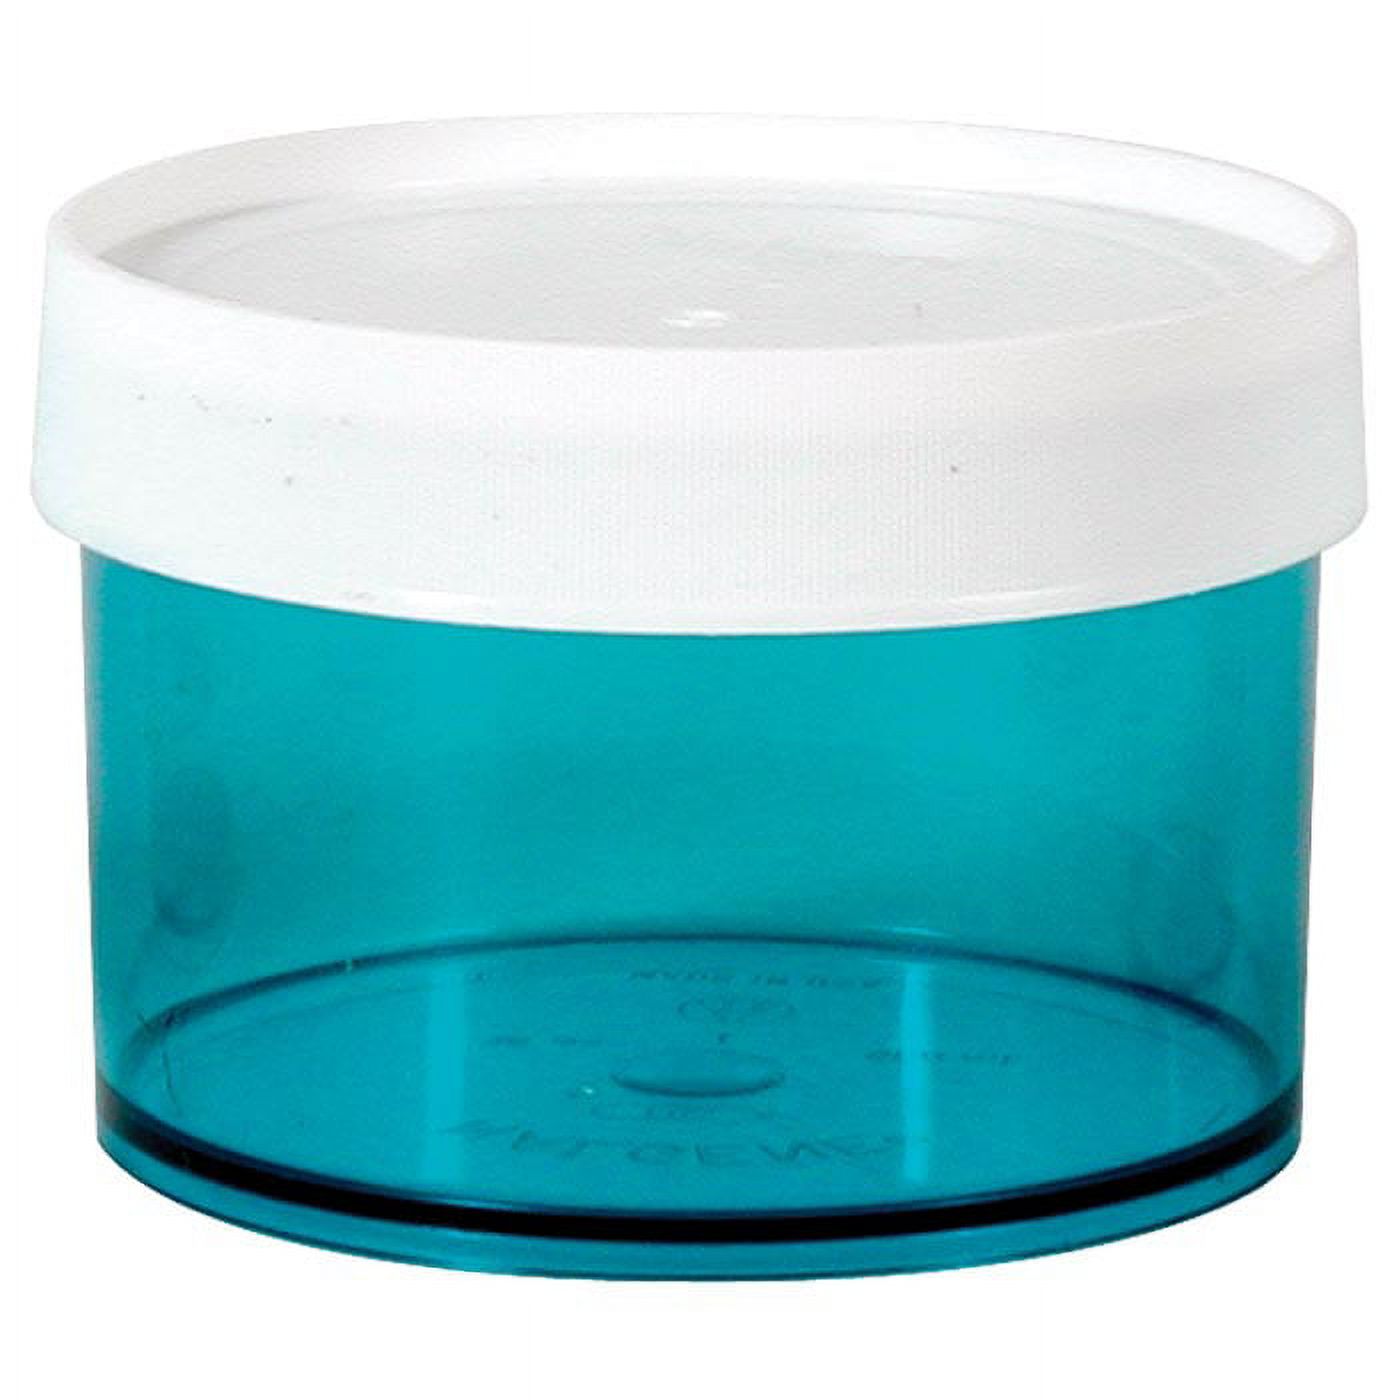 Nalgene Polypropylene Wide Mouth Storage Jar - 4 oz. - Clear - image 4 of 7